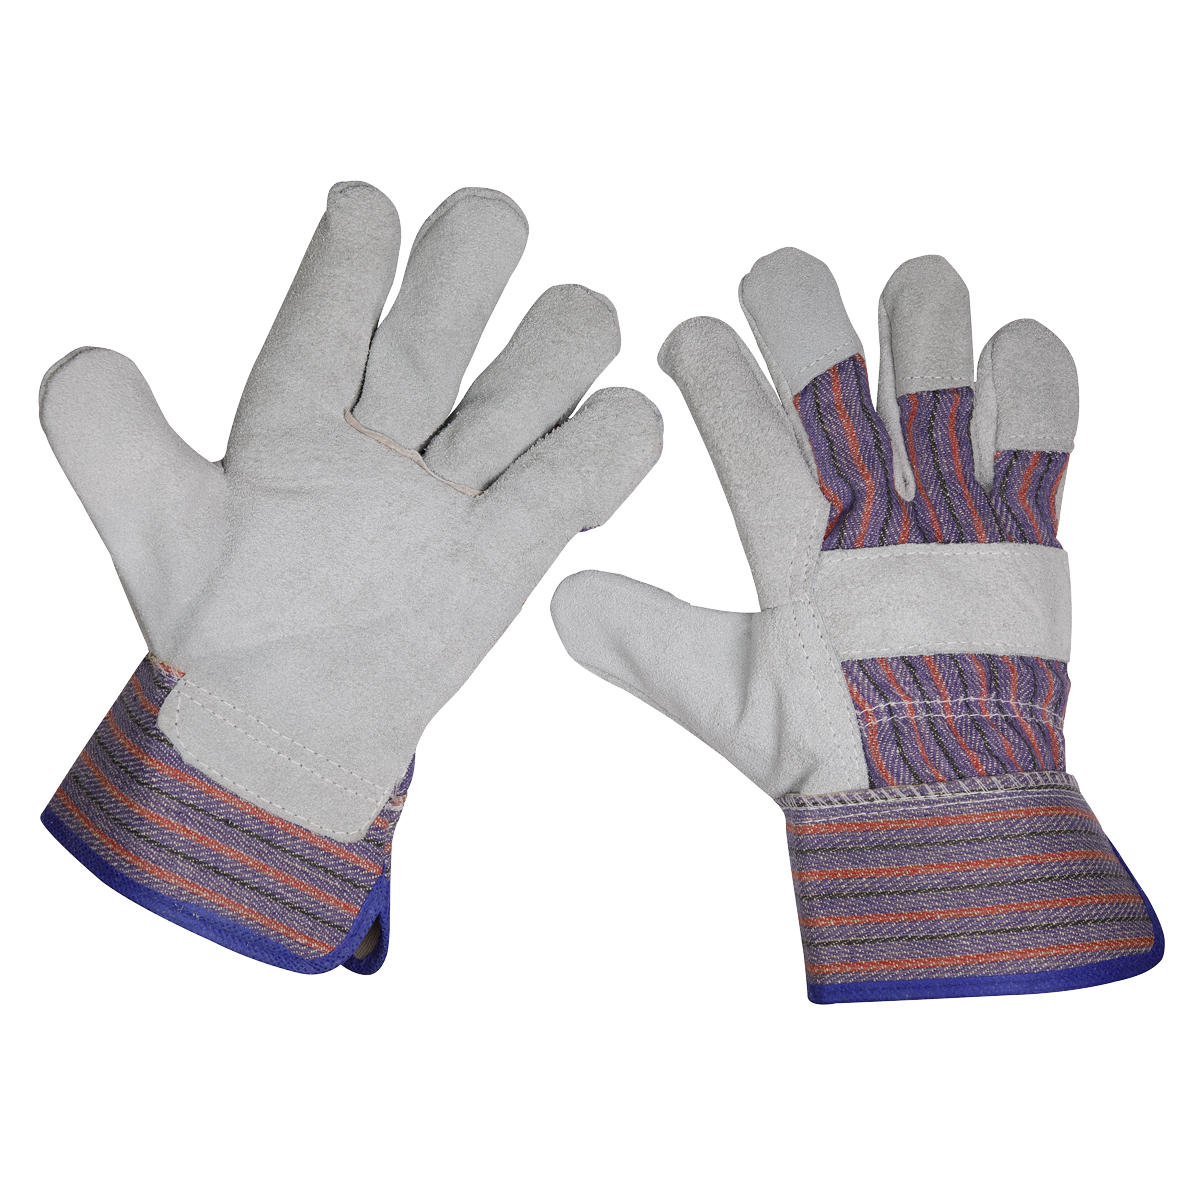 Rigger's Gloves Pair